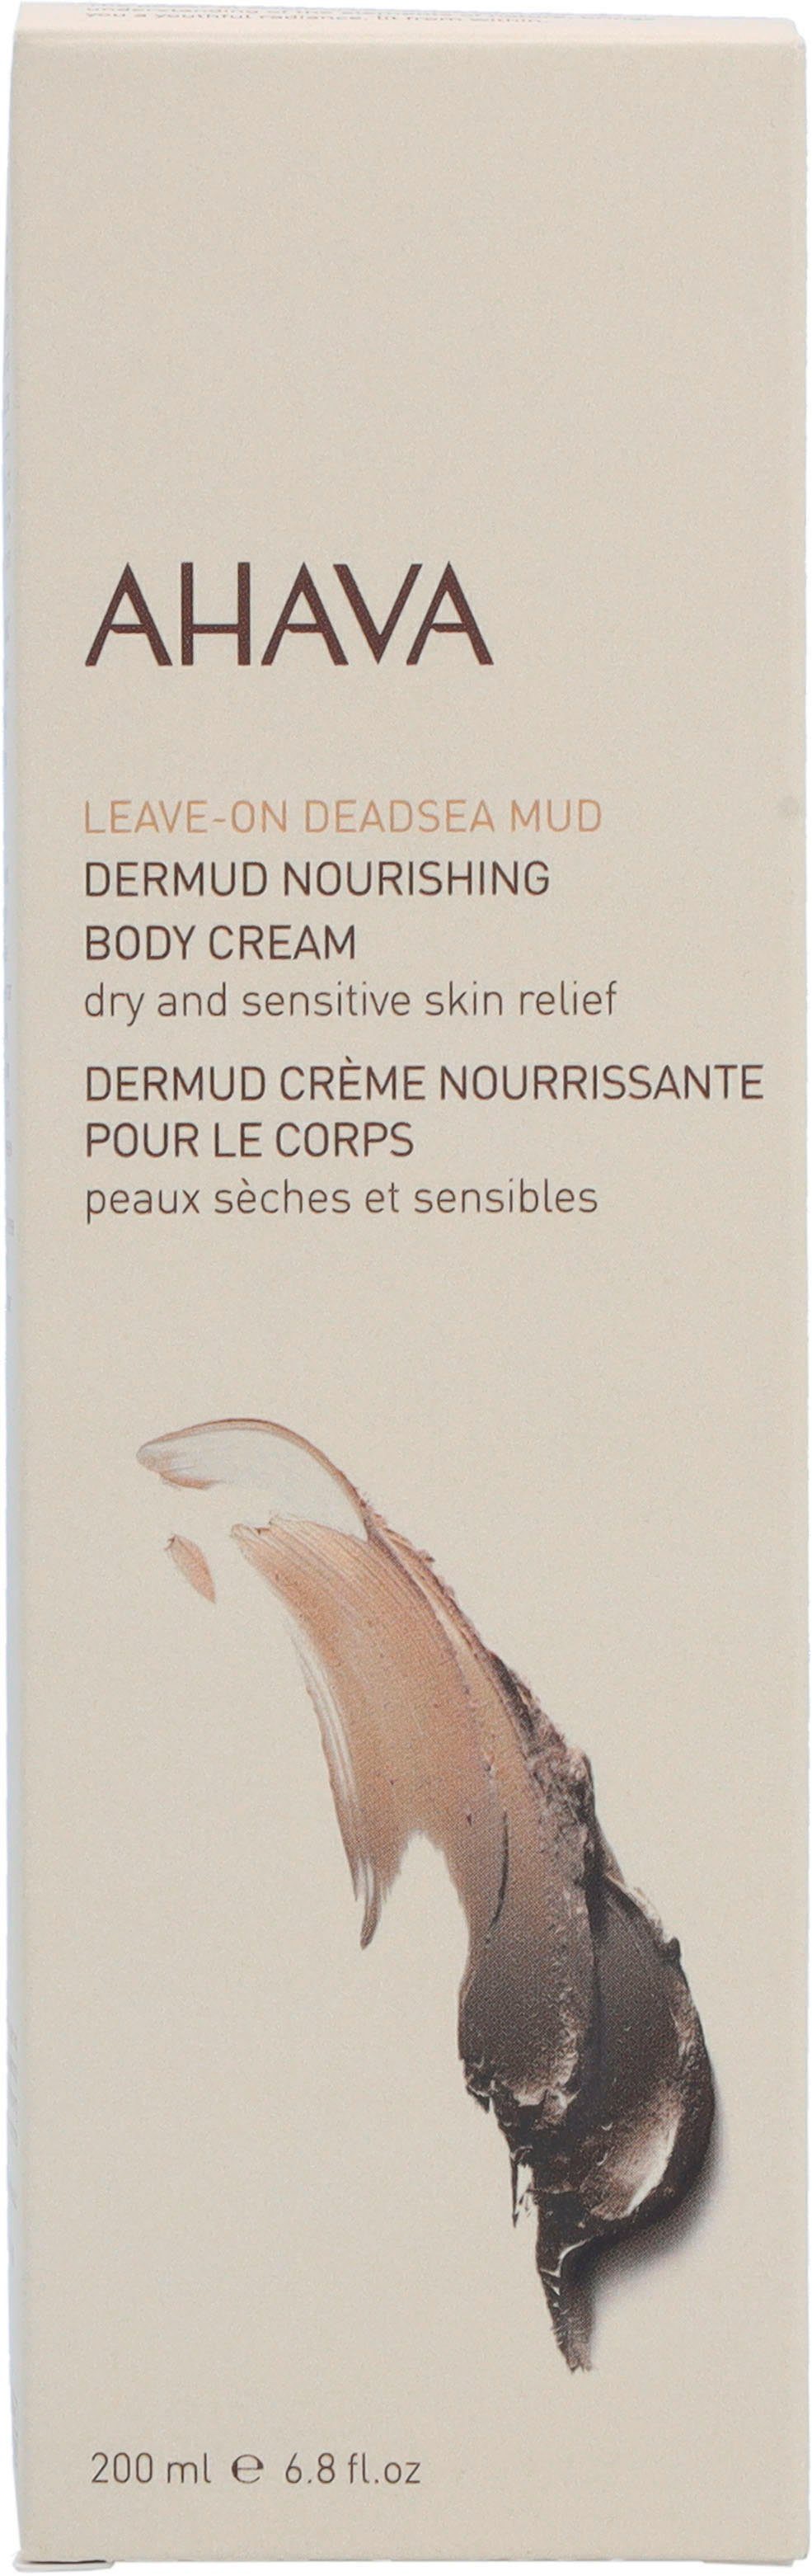 Cream Body Körpercreme Mud AHAVA Deadsea Dermud Nourishing